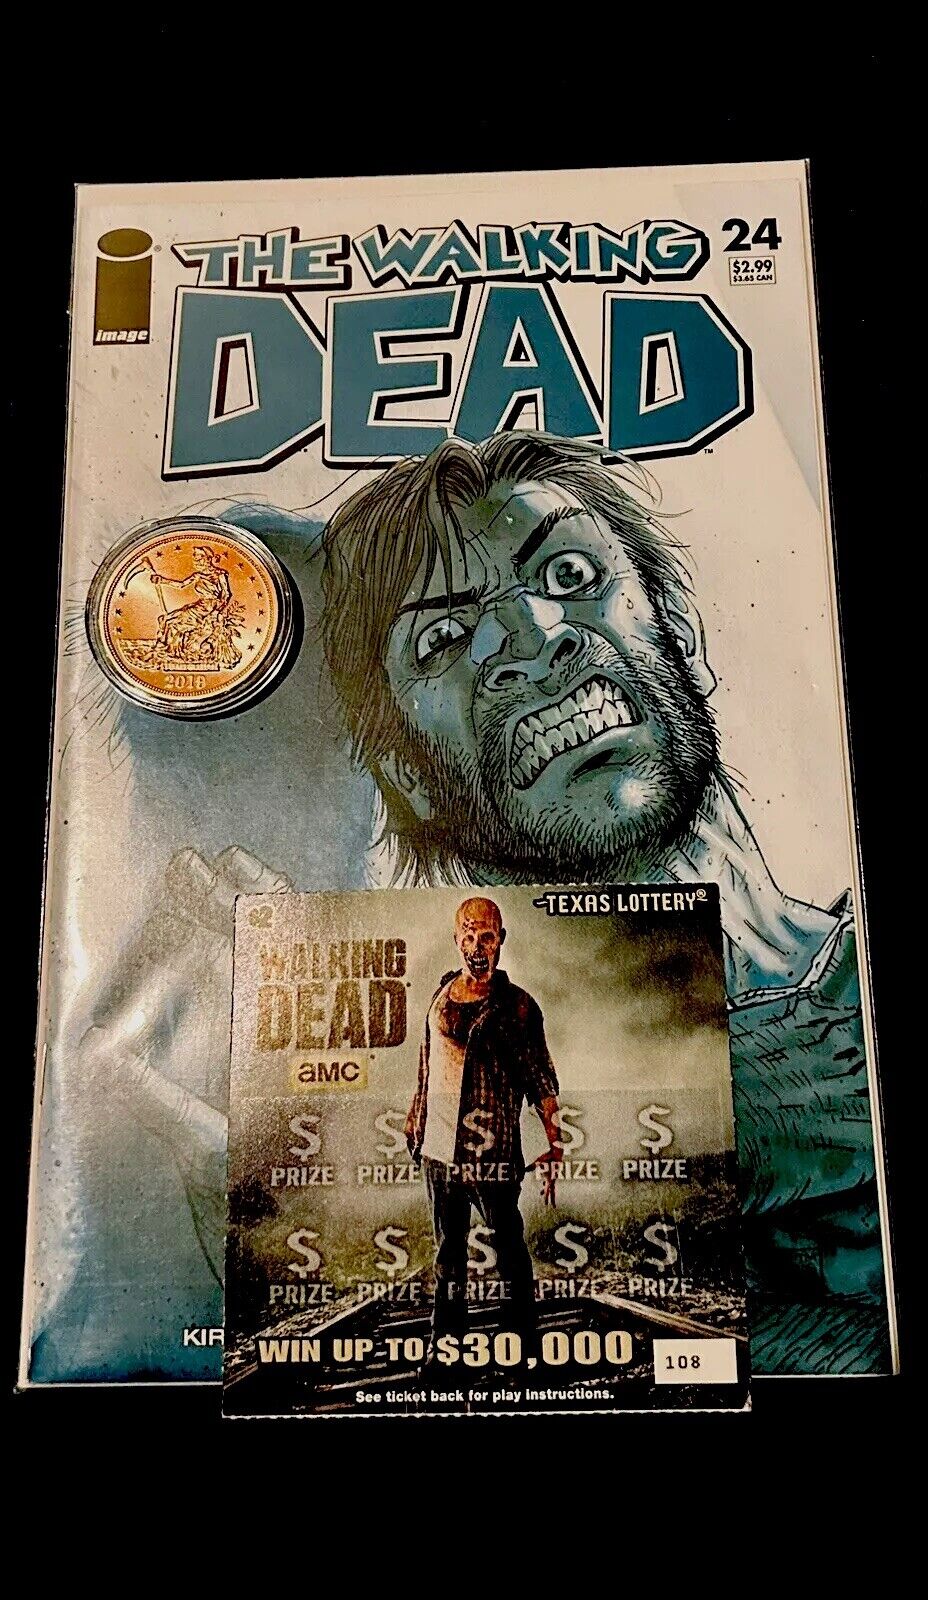 The Walking Dead #24 (Image Comics Malibu Comics November 2005)